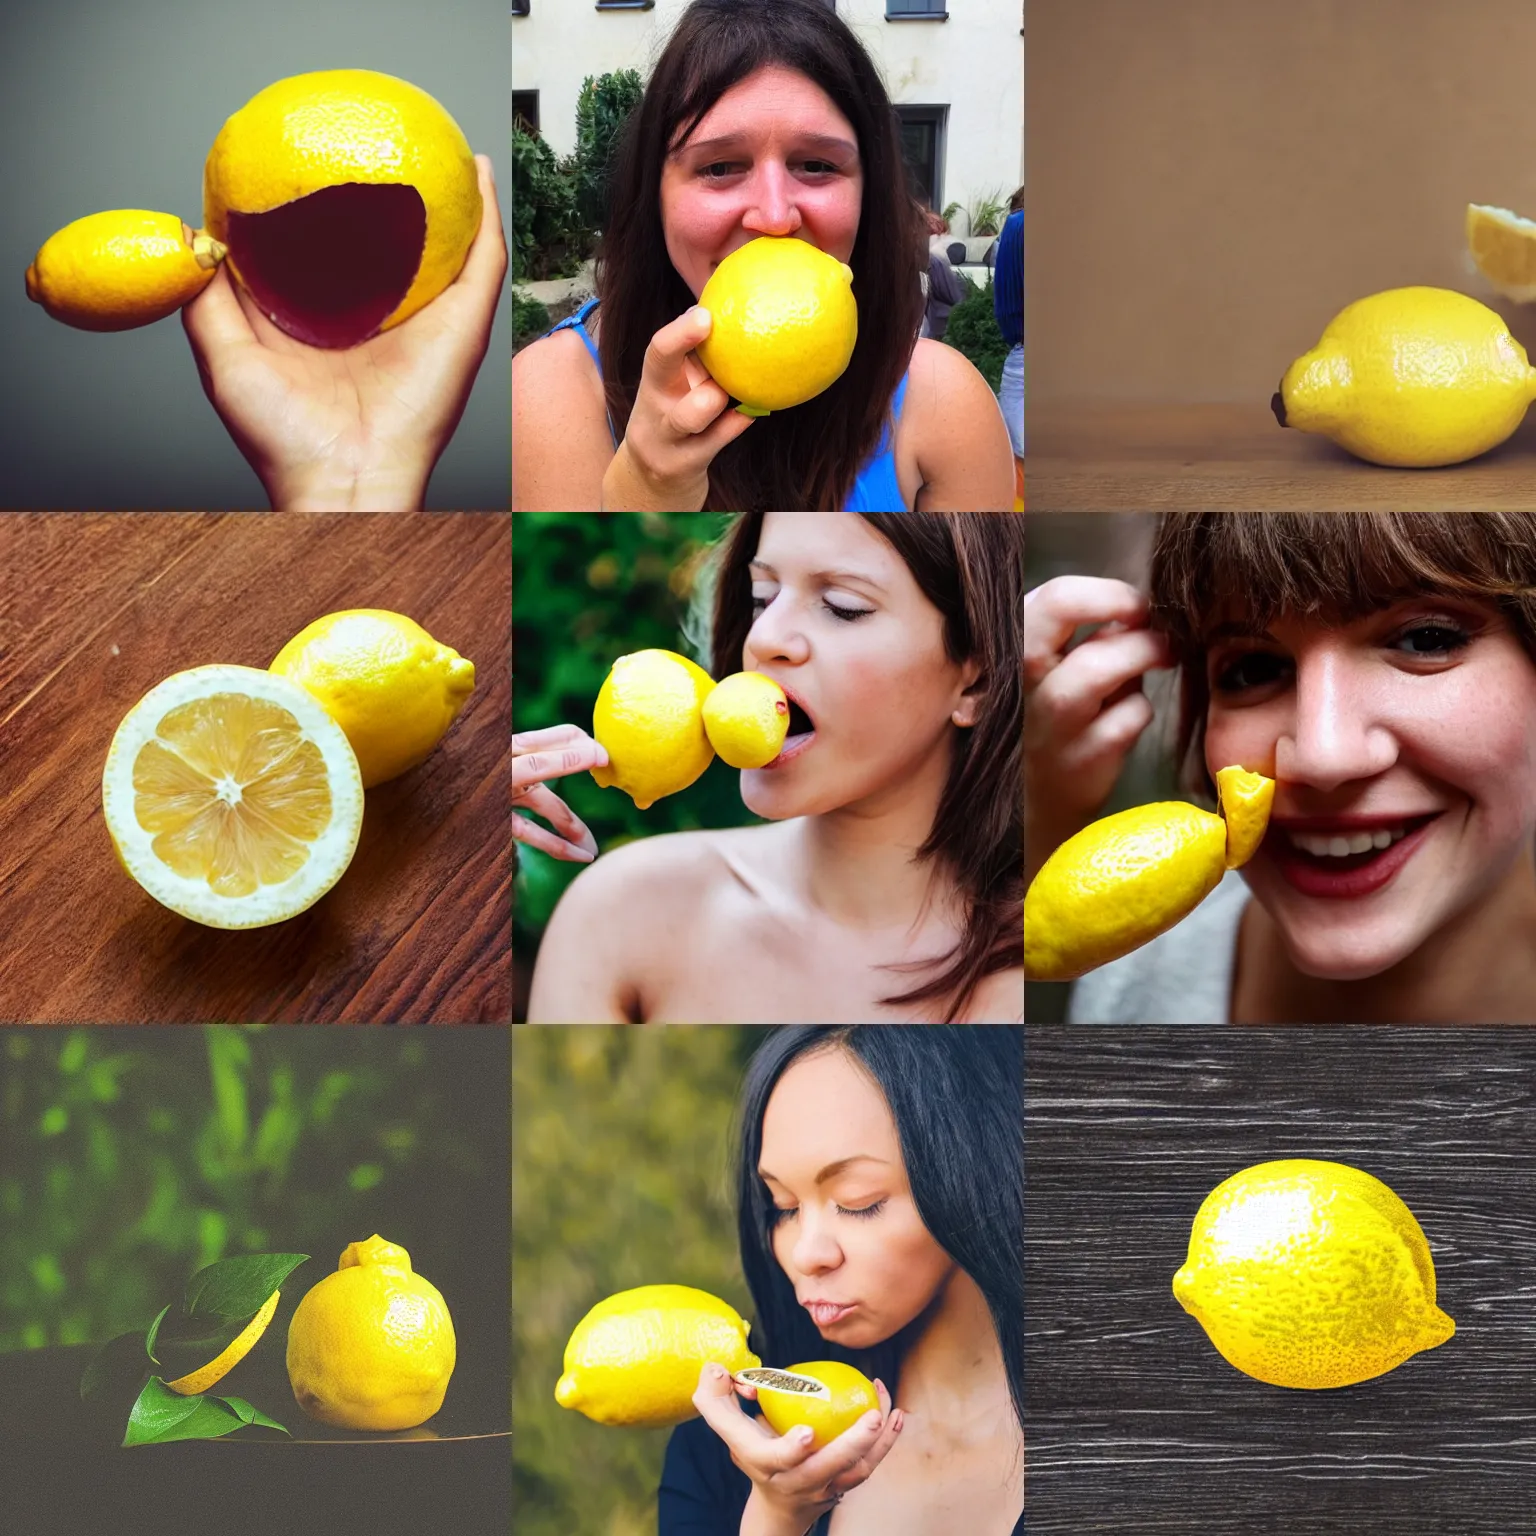 Prompt: lemon eating a lemon